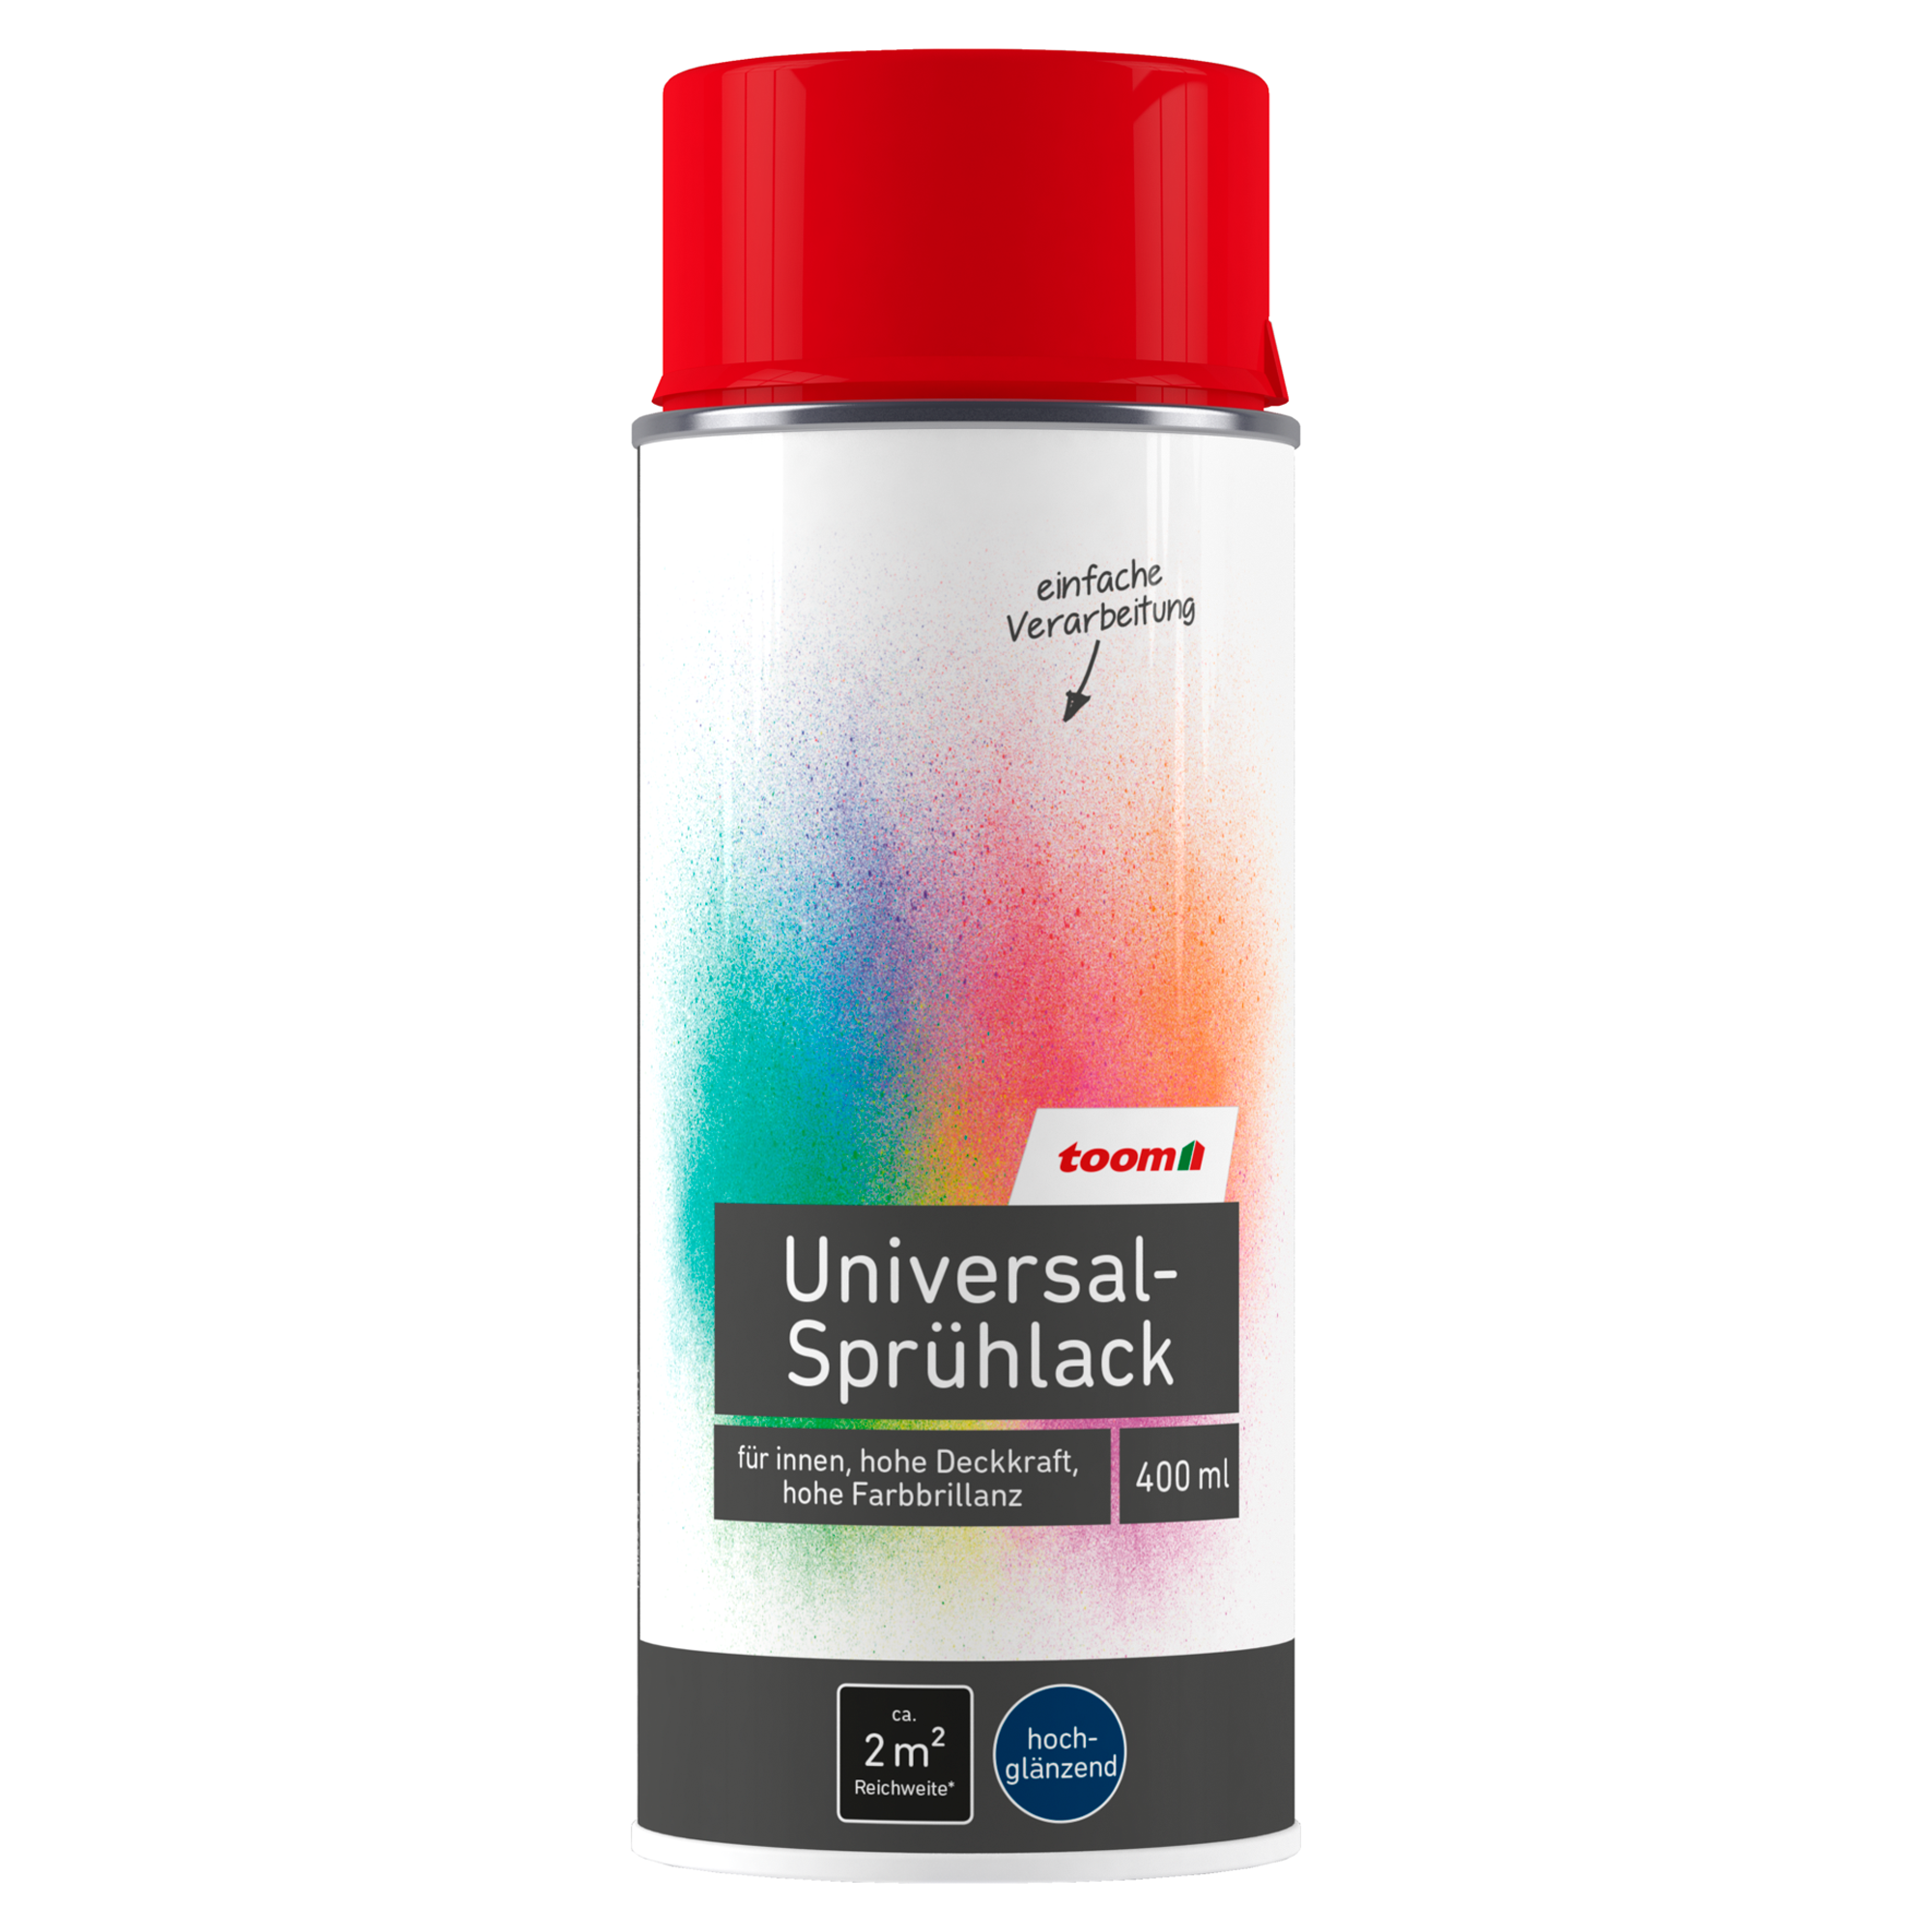 Universal-Sprühlack 'Mohnblume' feuerrot glänzend 400 ml + product picture